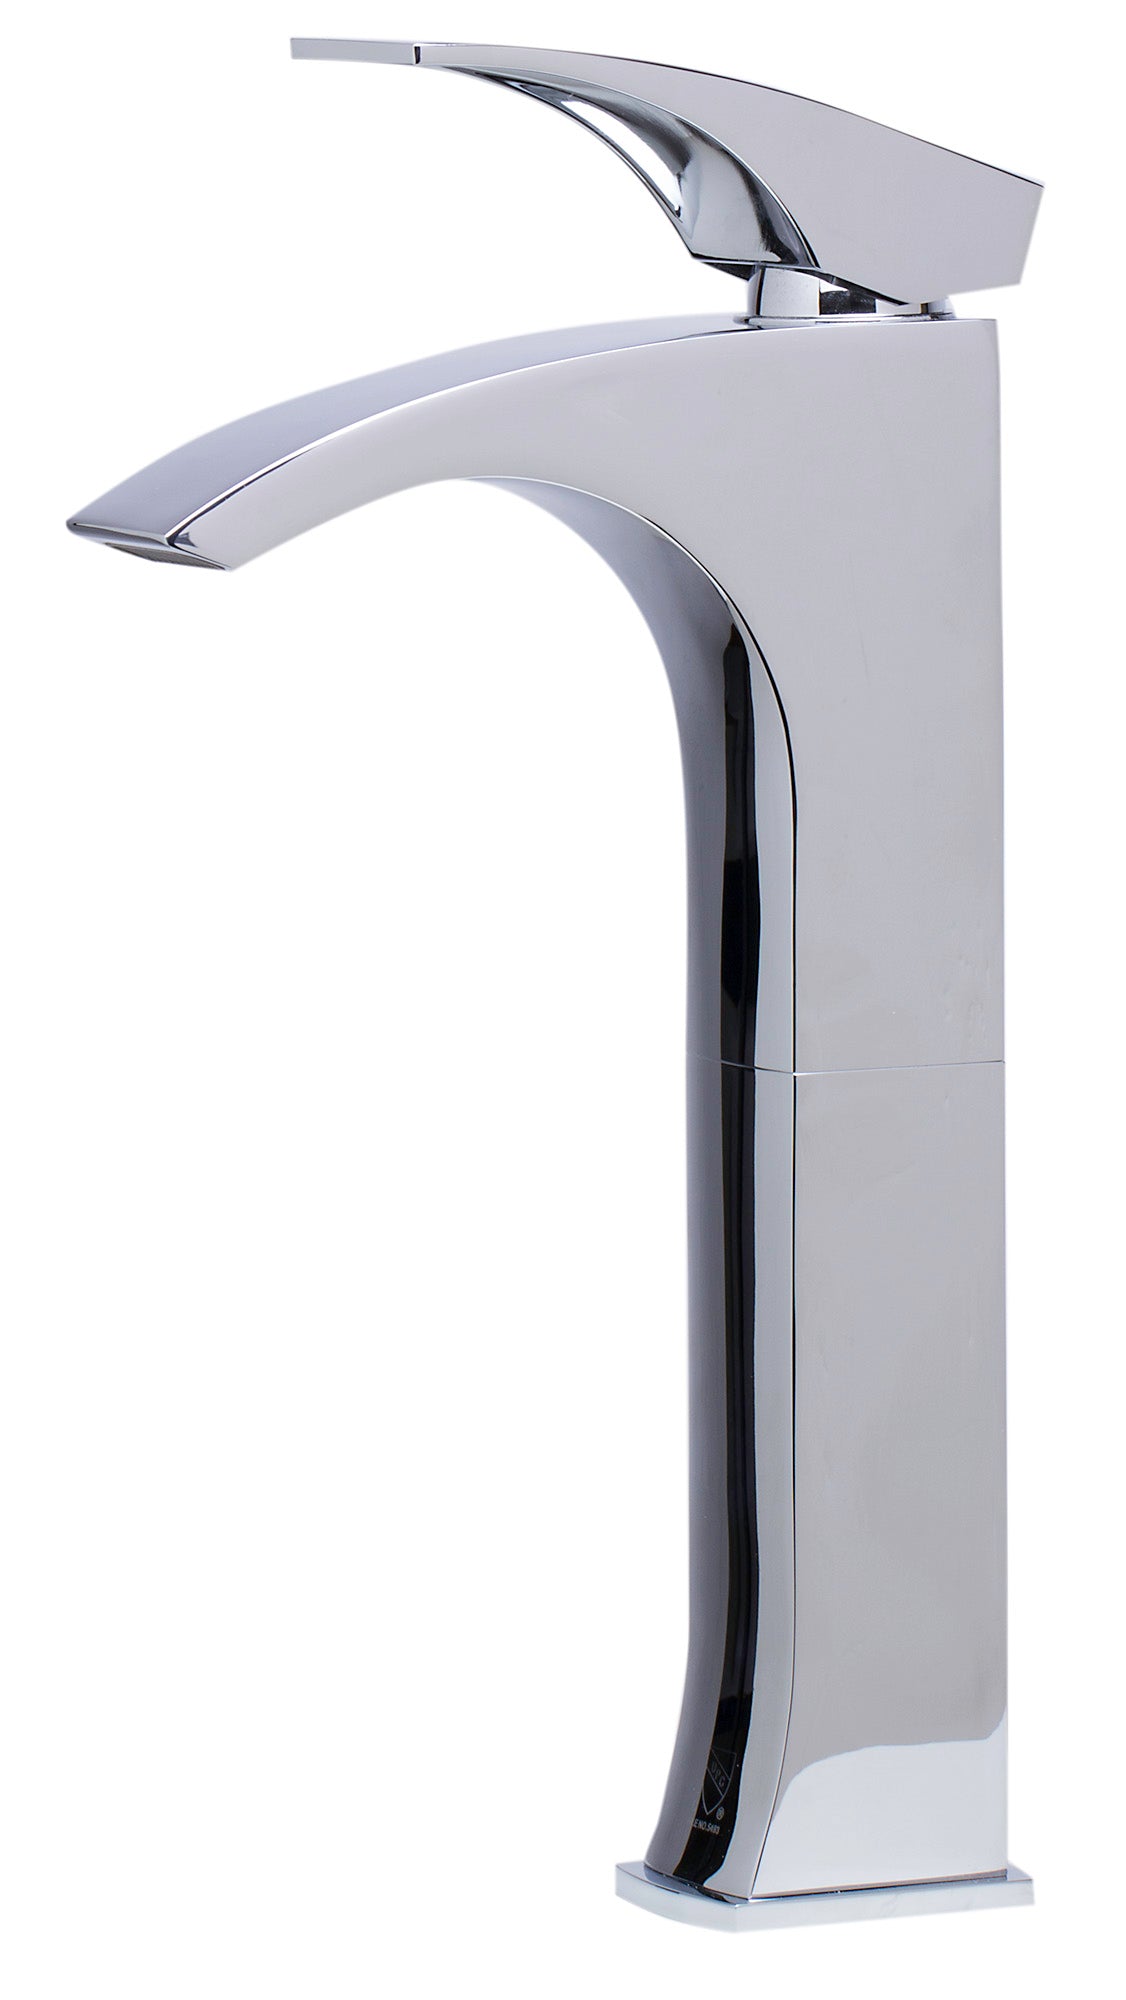 ALFI brand AB1587-PC Tall Polished Chrome Single Lever Bathroom Faucet